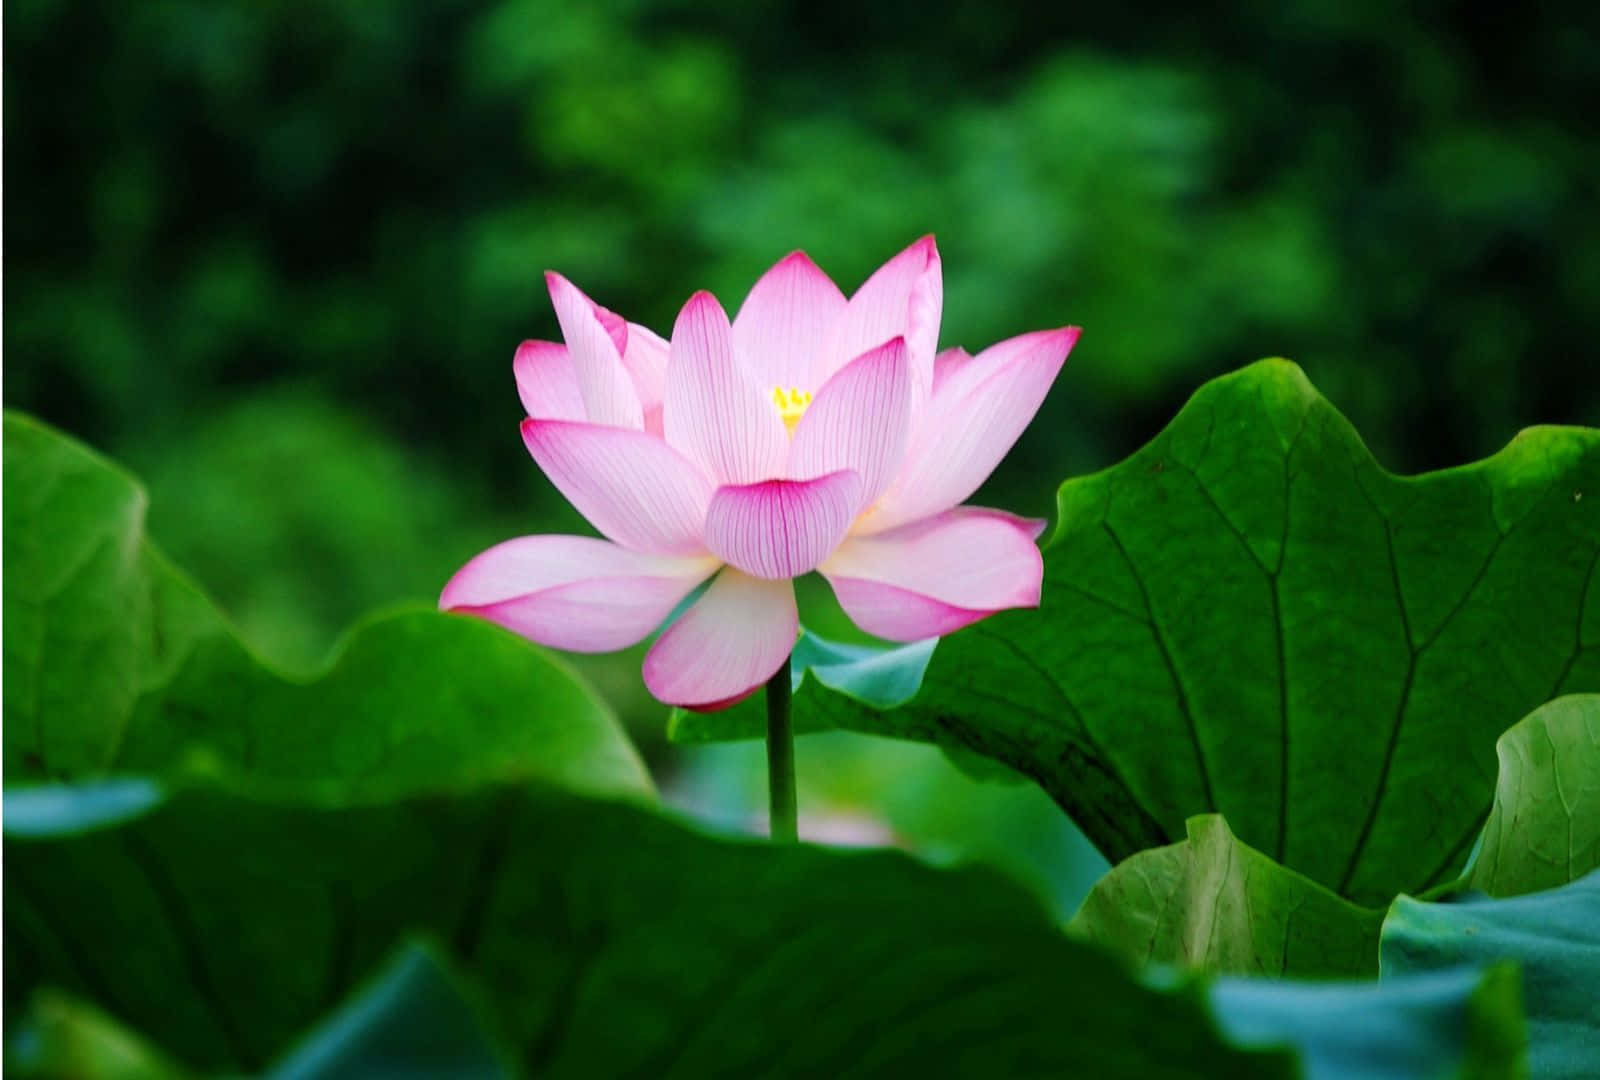 Serene Lotus Flower on Tranquil Waters